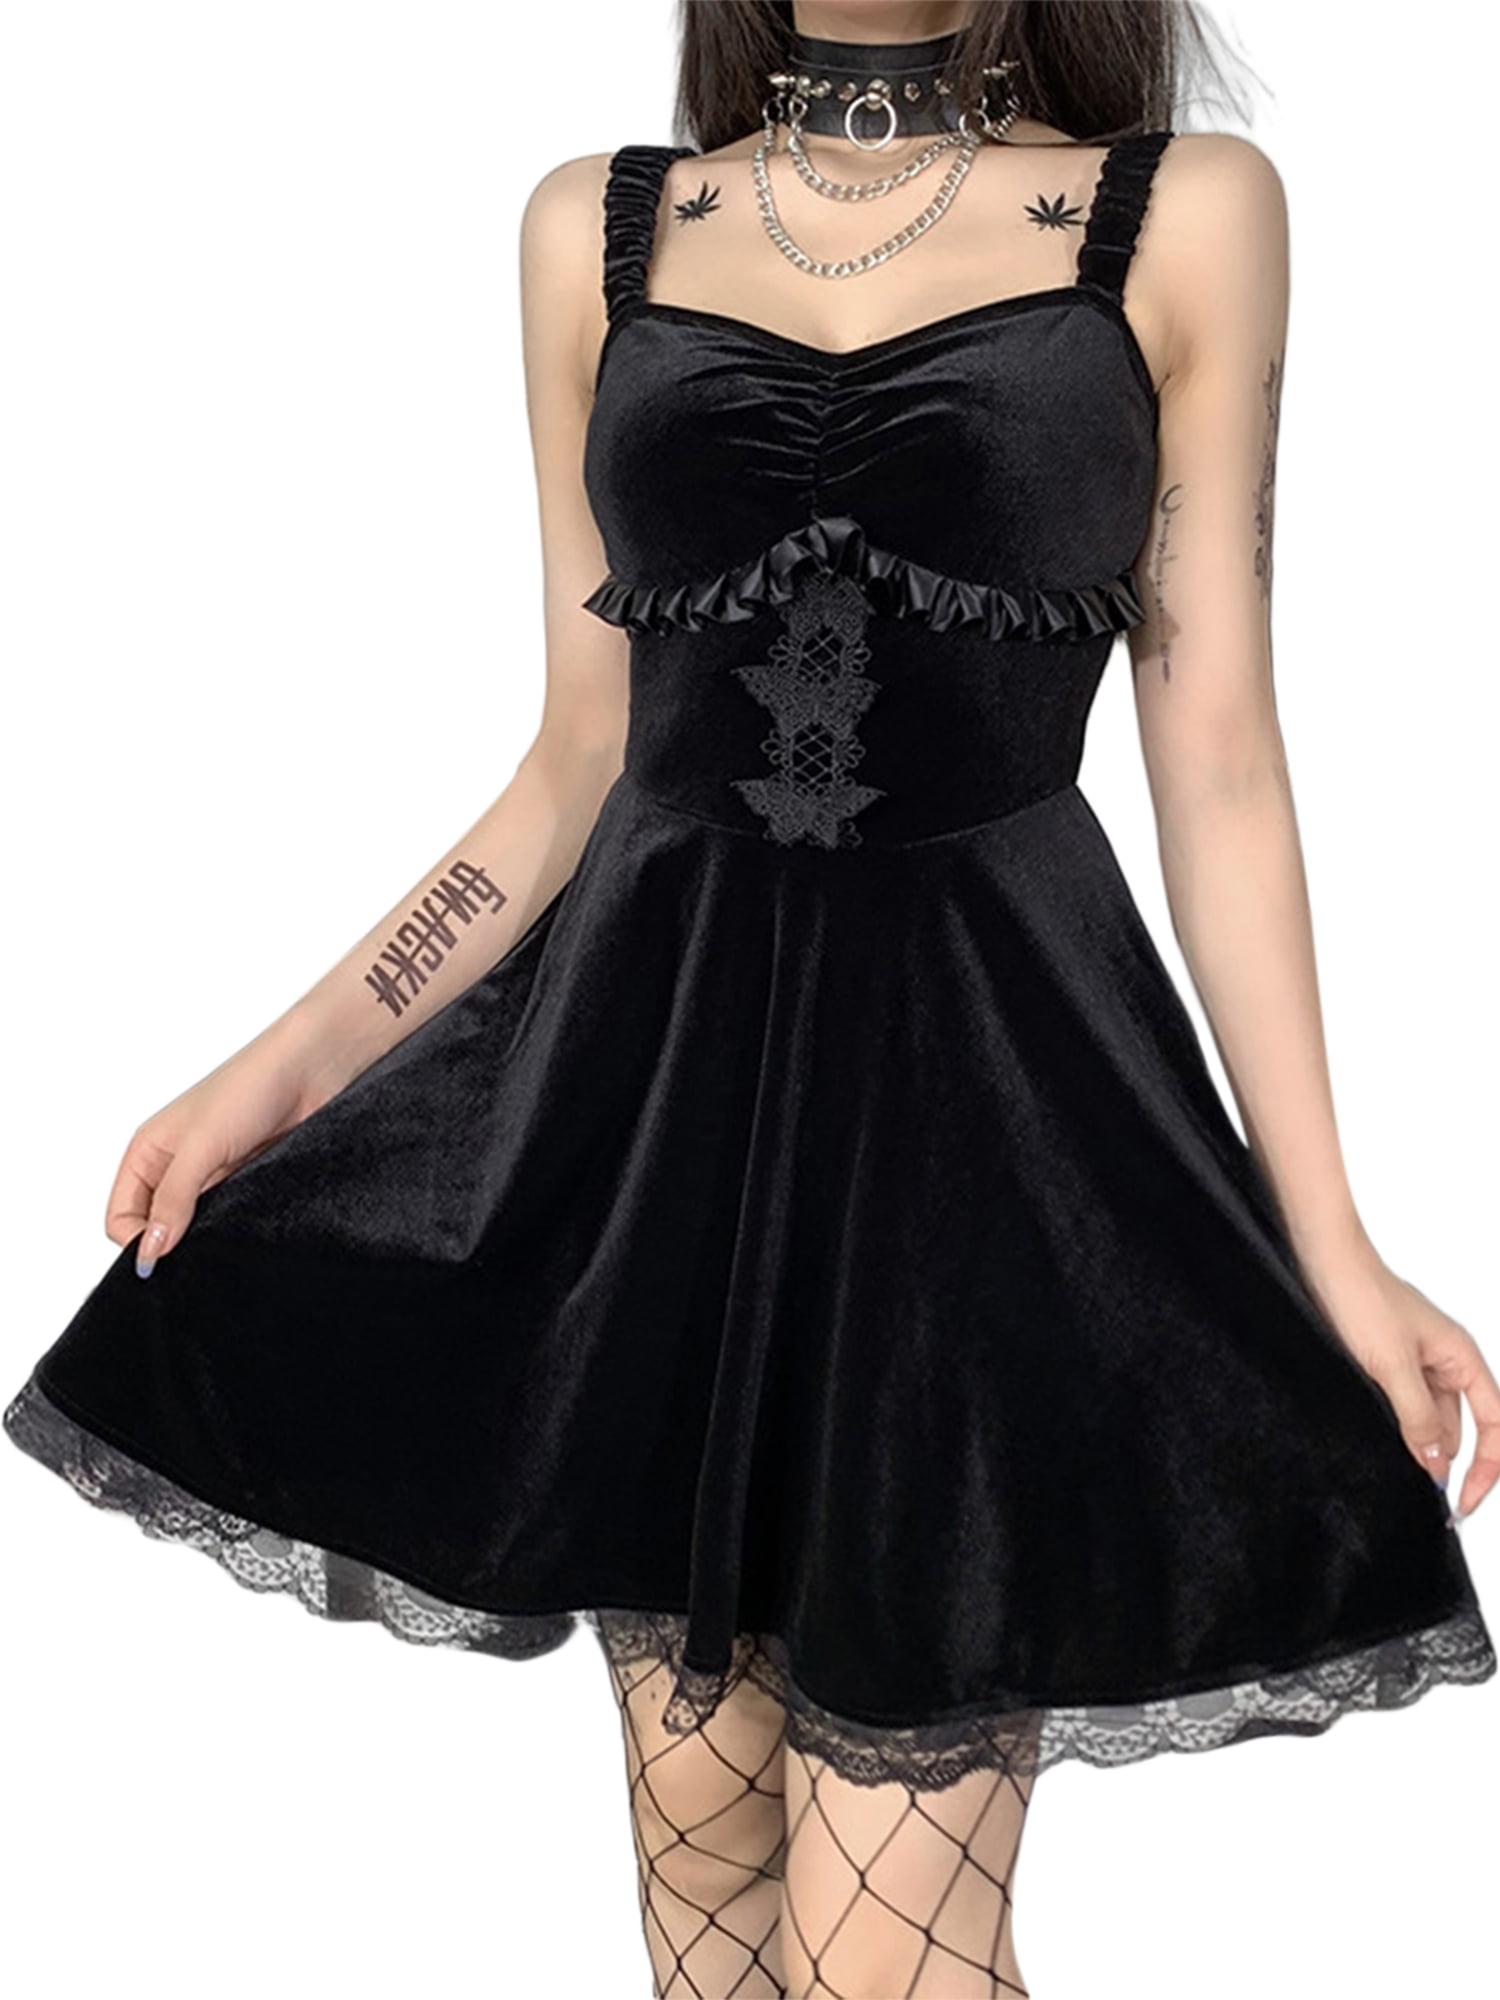 Lace Up Mini Skirt Women Dark Gothic Mesh A-Line Punk Style Party Black  Dress